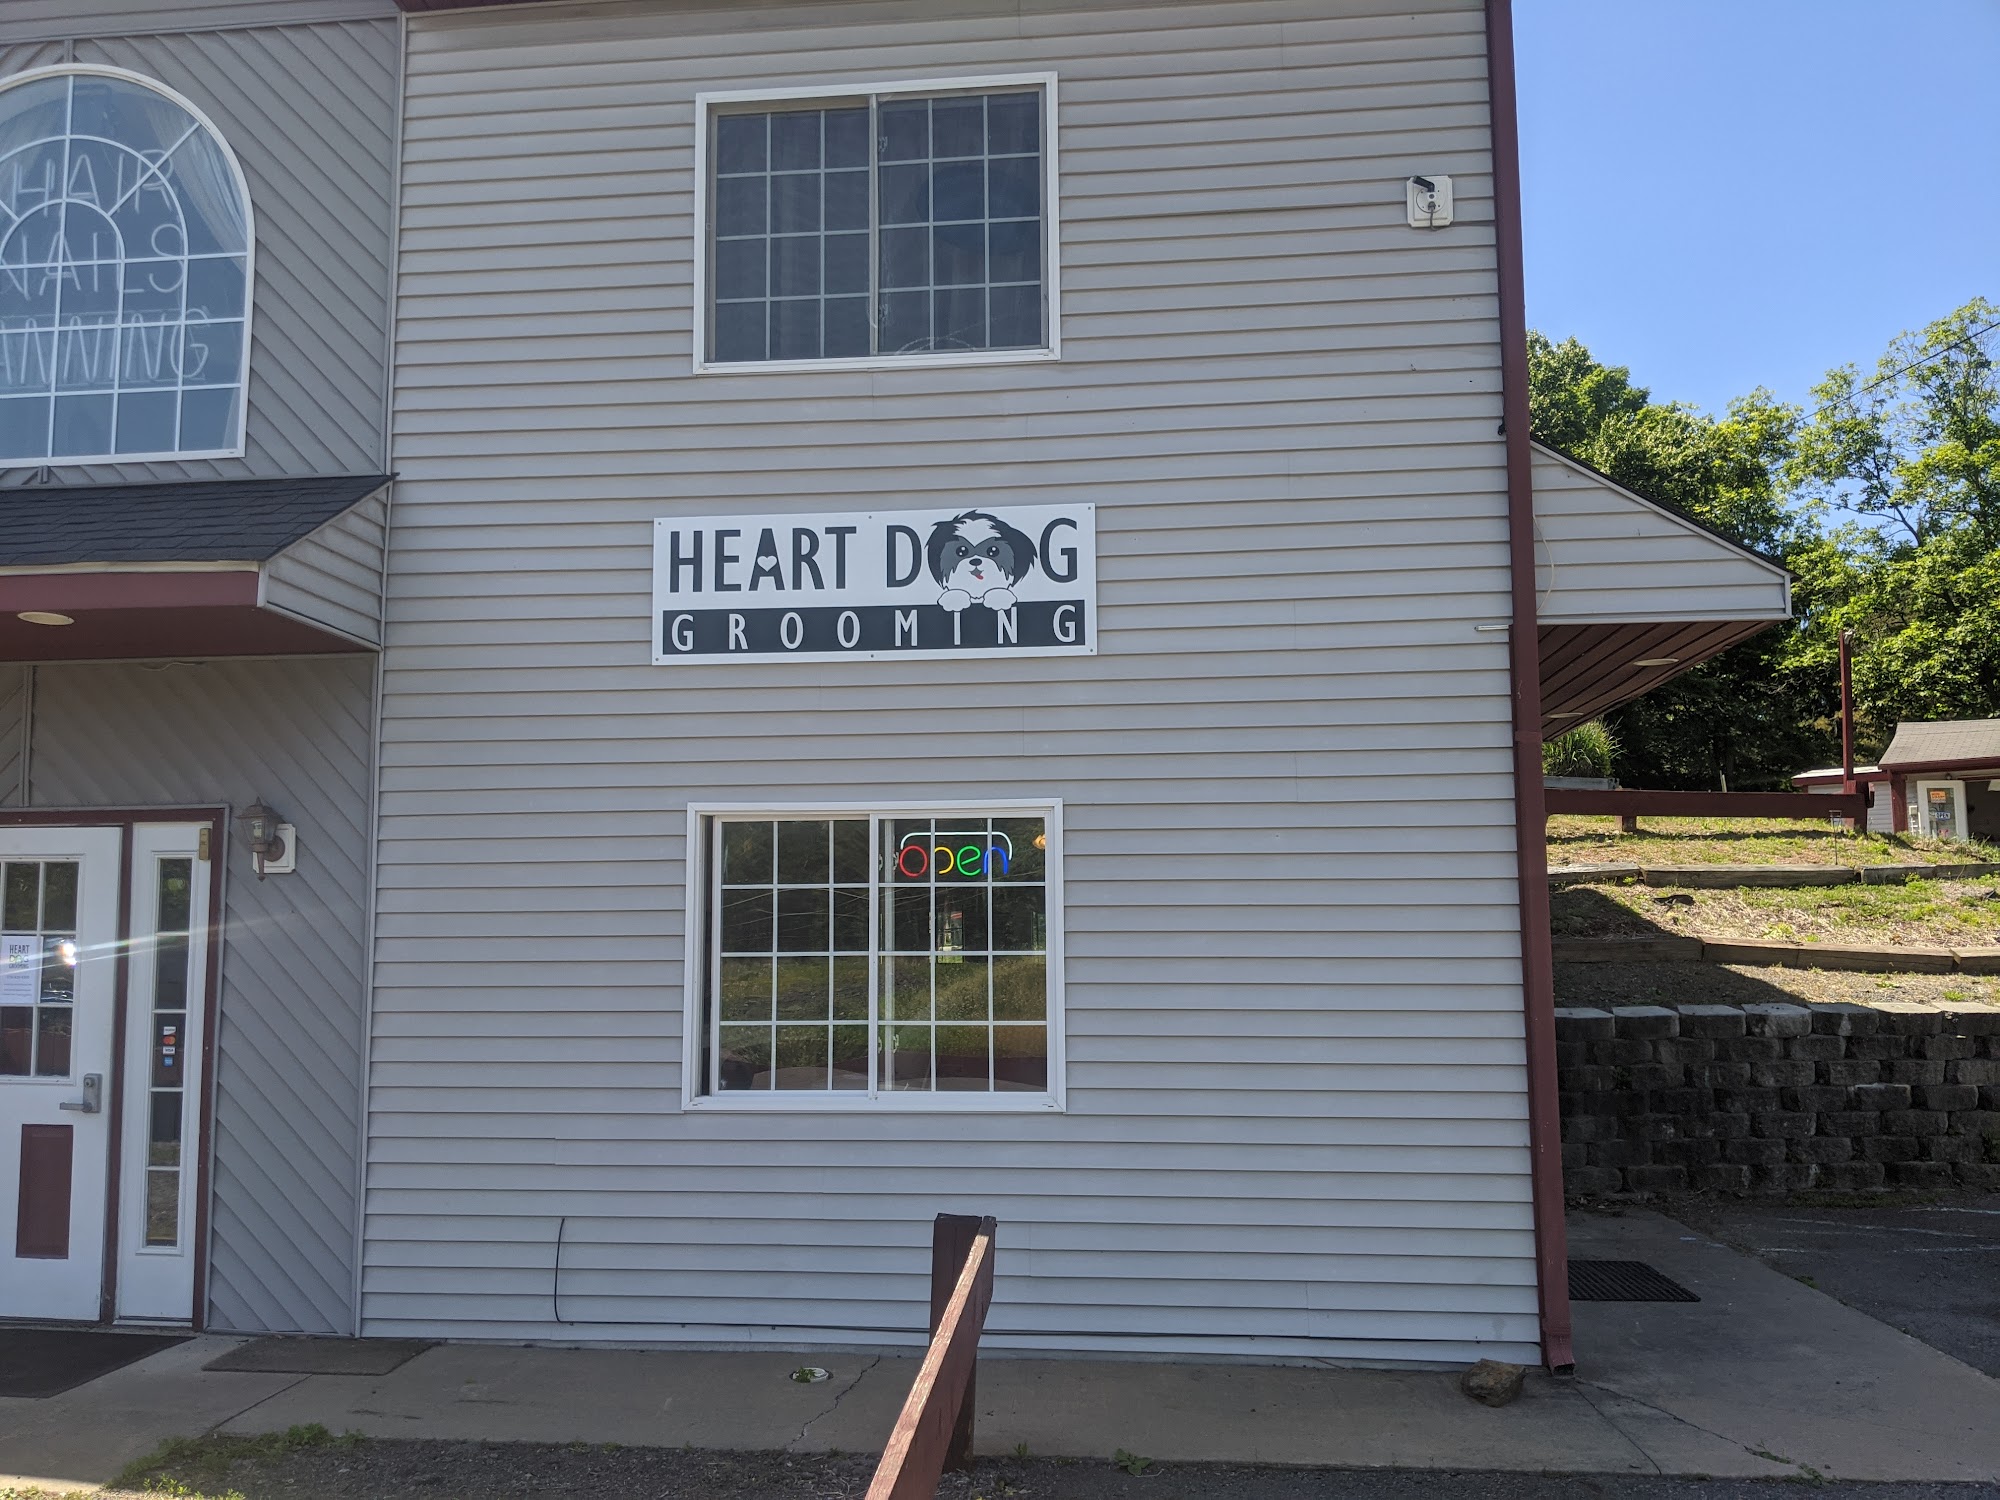 Heart Dog Grooming 1831 PA-739, Dingmans Ferry Pennsylvania 18328